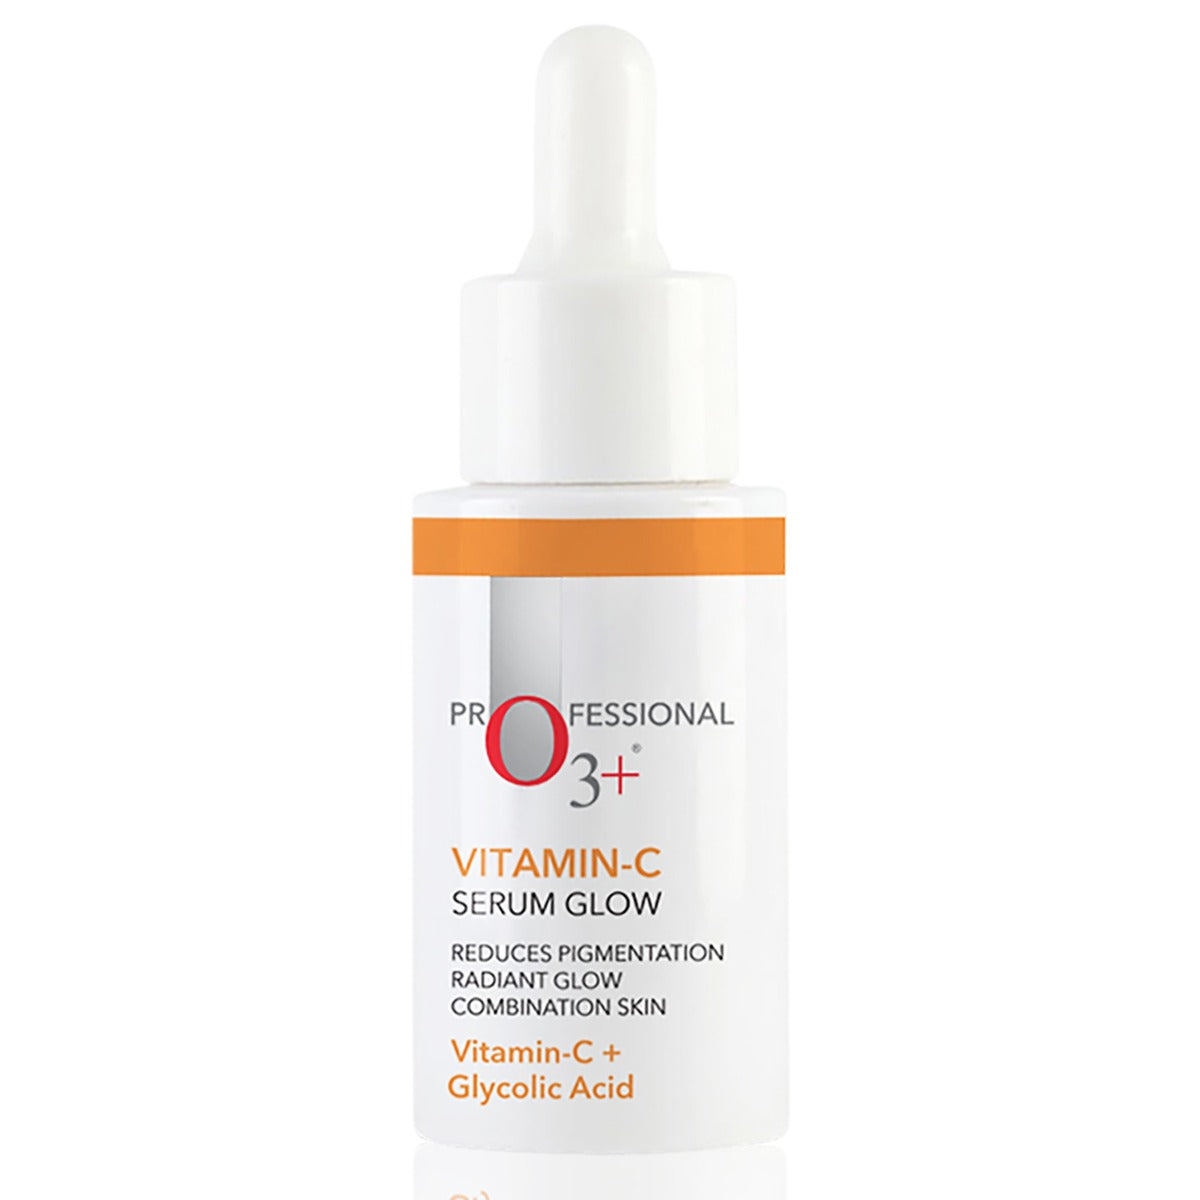 Vitamin-C Serum Glow for Dark Spots and Pigmentation (30ml)